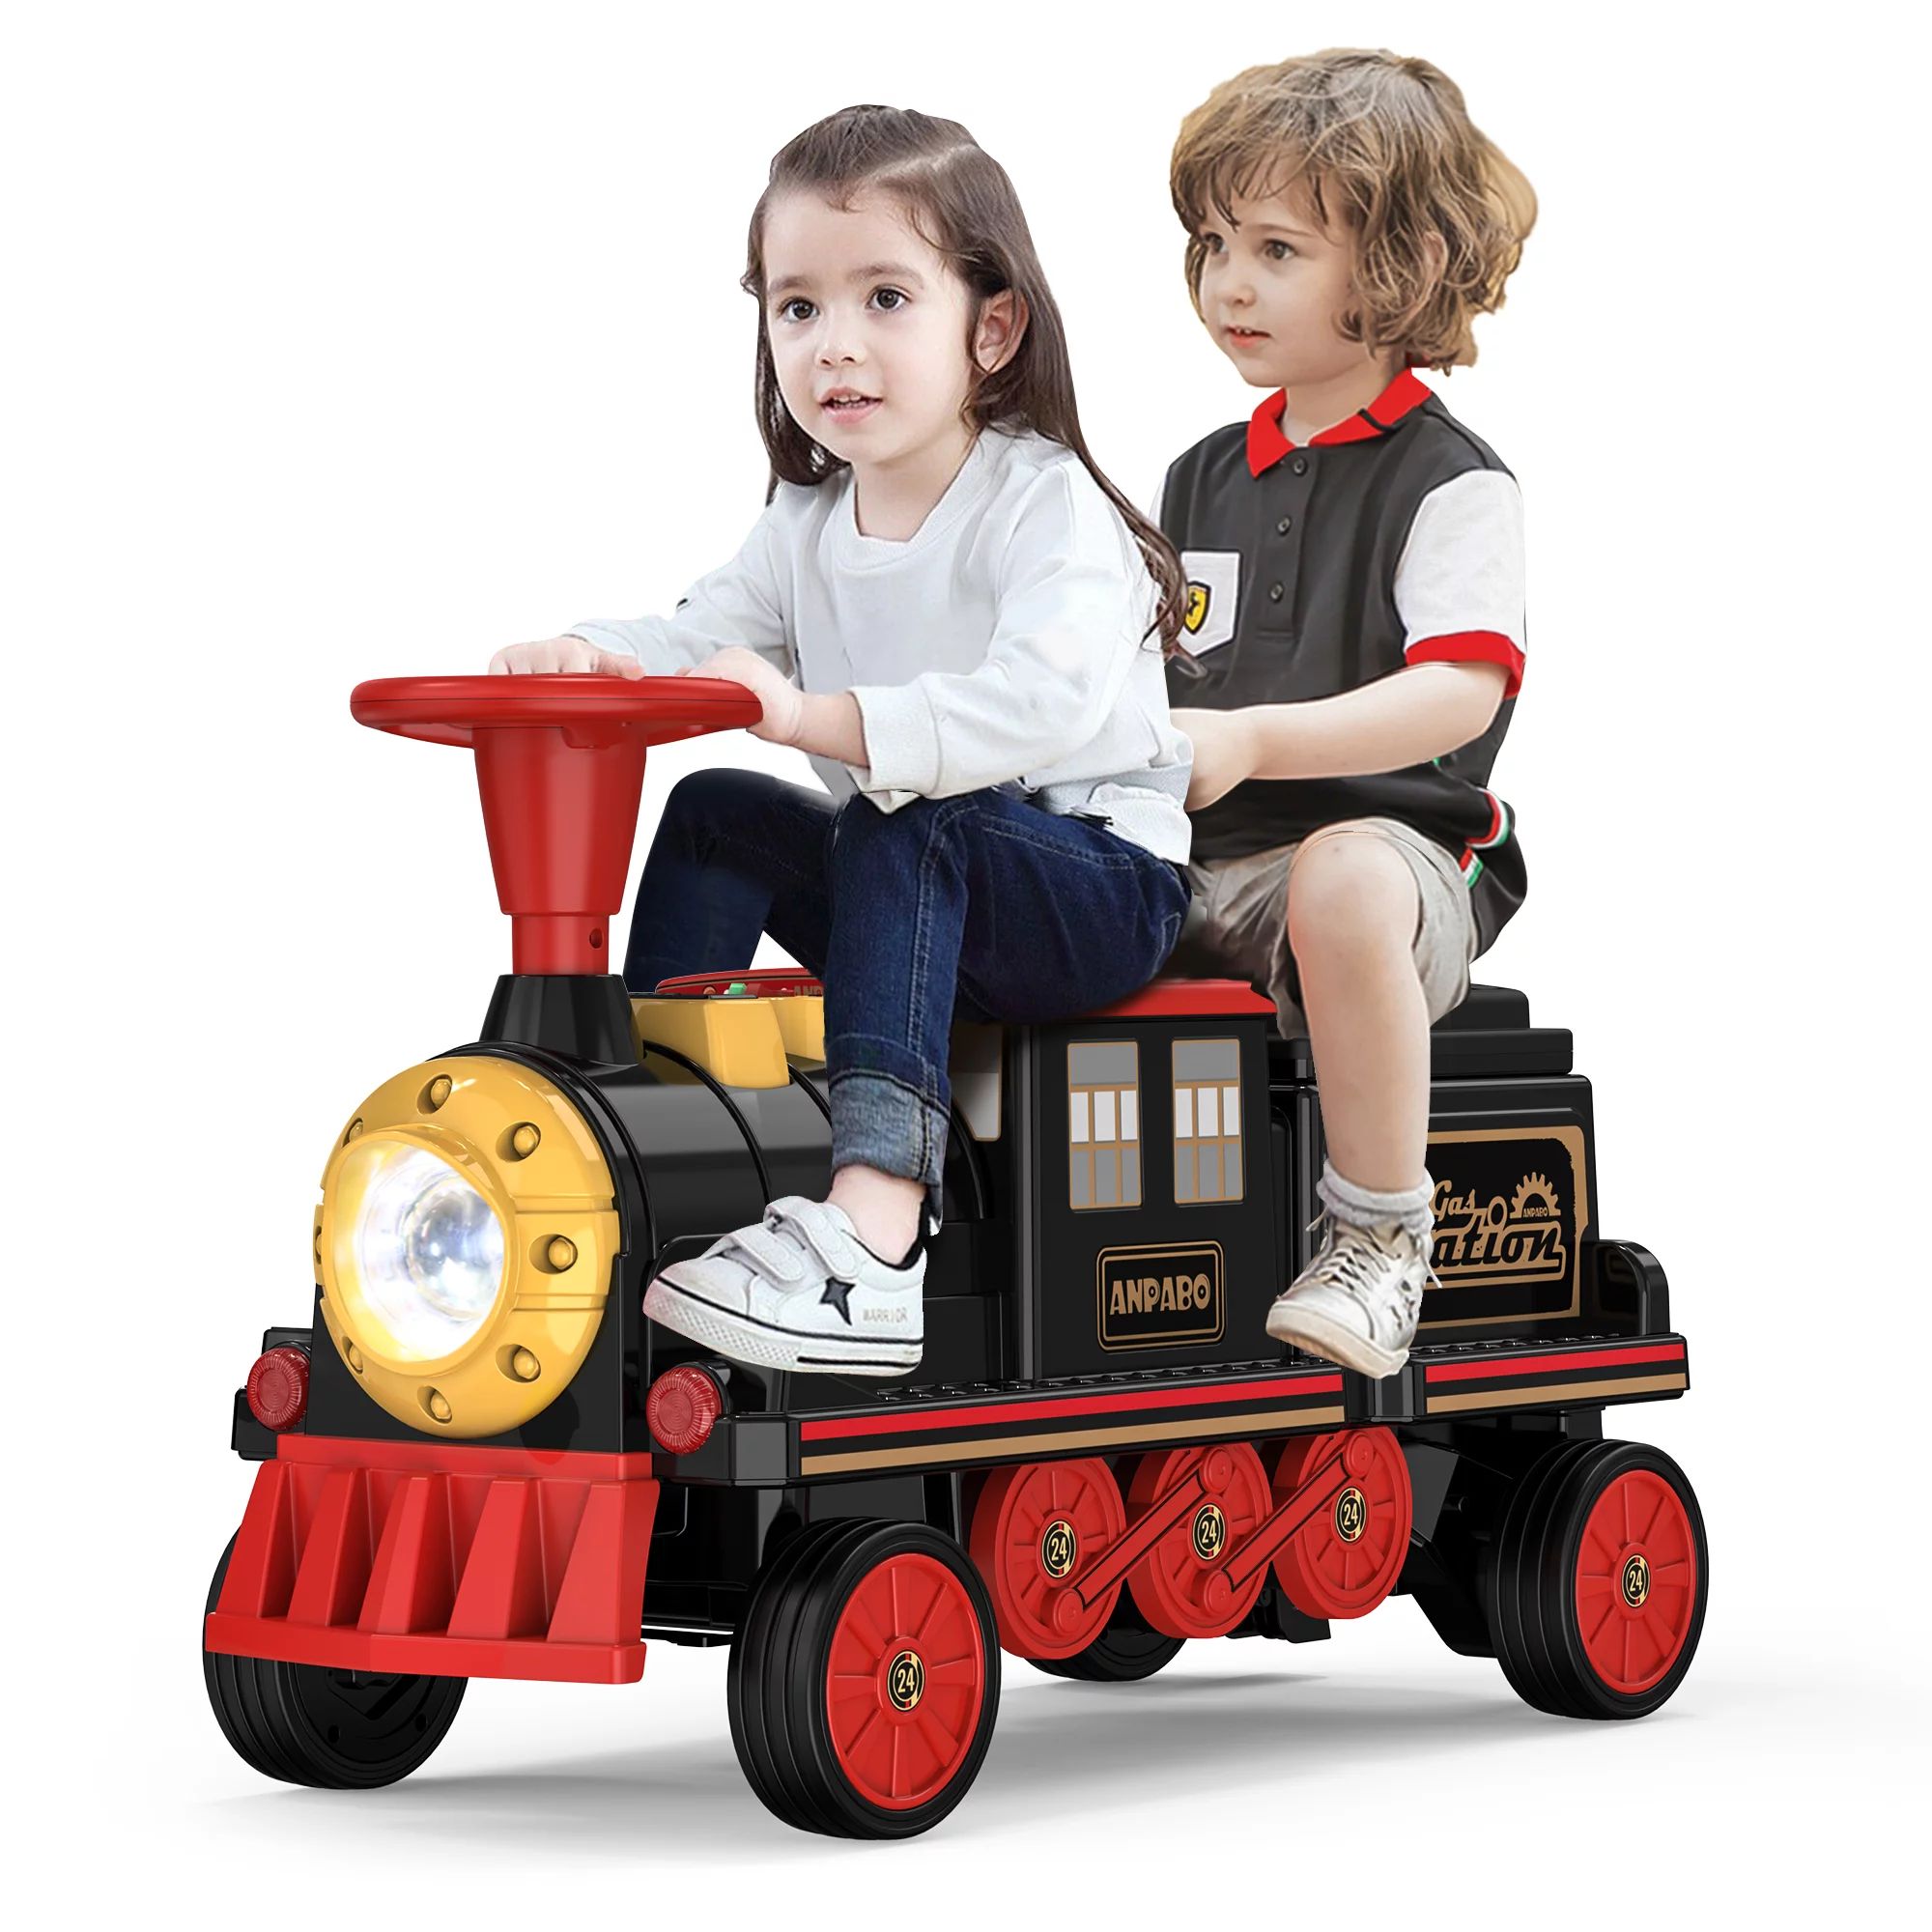 TOKTOO 12V Battery Powered Ride on Train W/ Rubber Wheels, Storage Box, LED Headlight, Music Play... | Walmart (US)